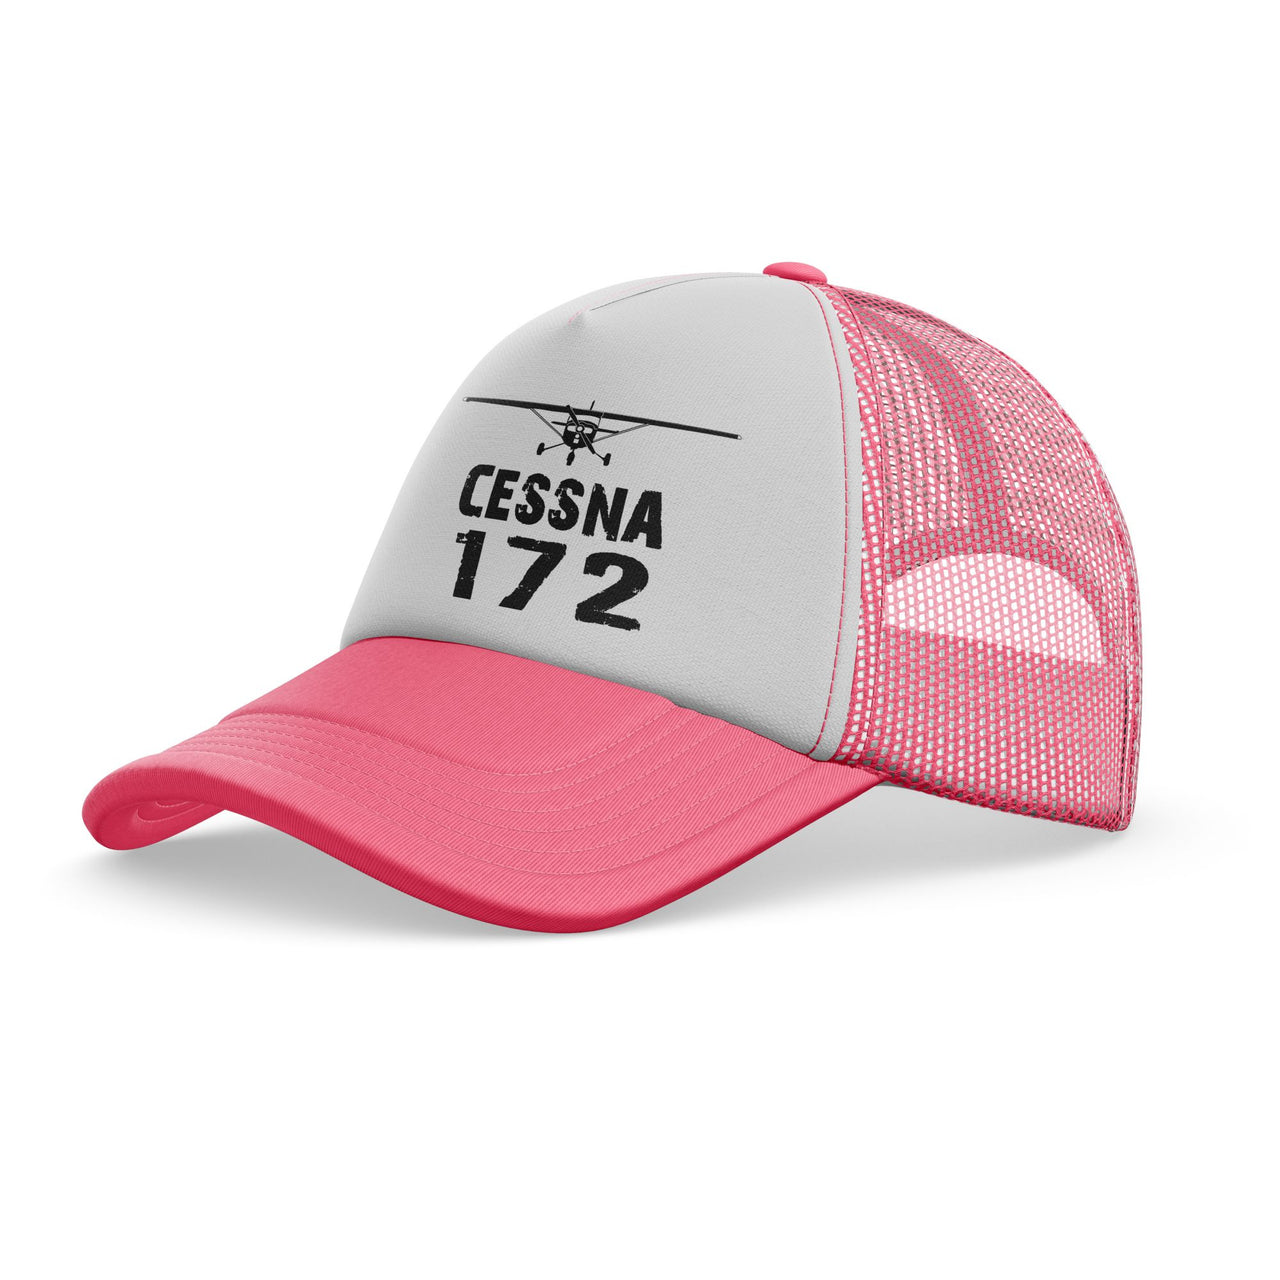 Cessna 172 & Plane Designed Trucker Caps & Hats